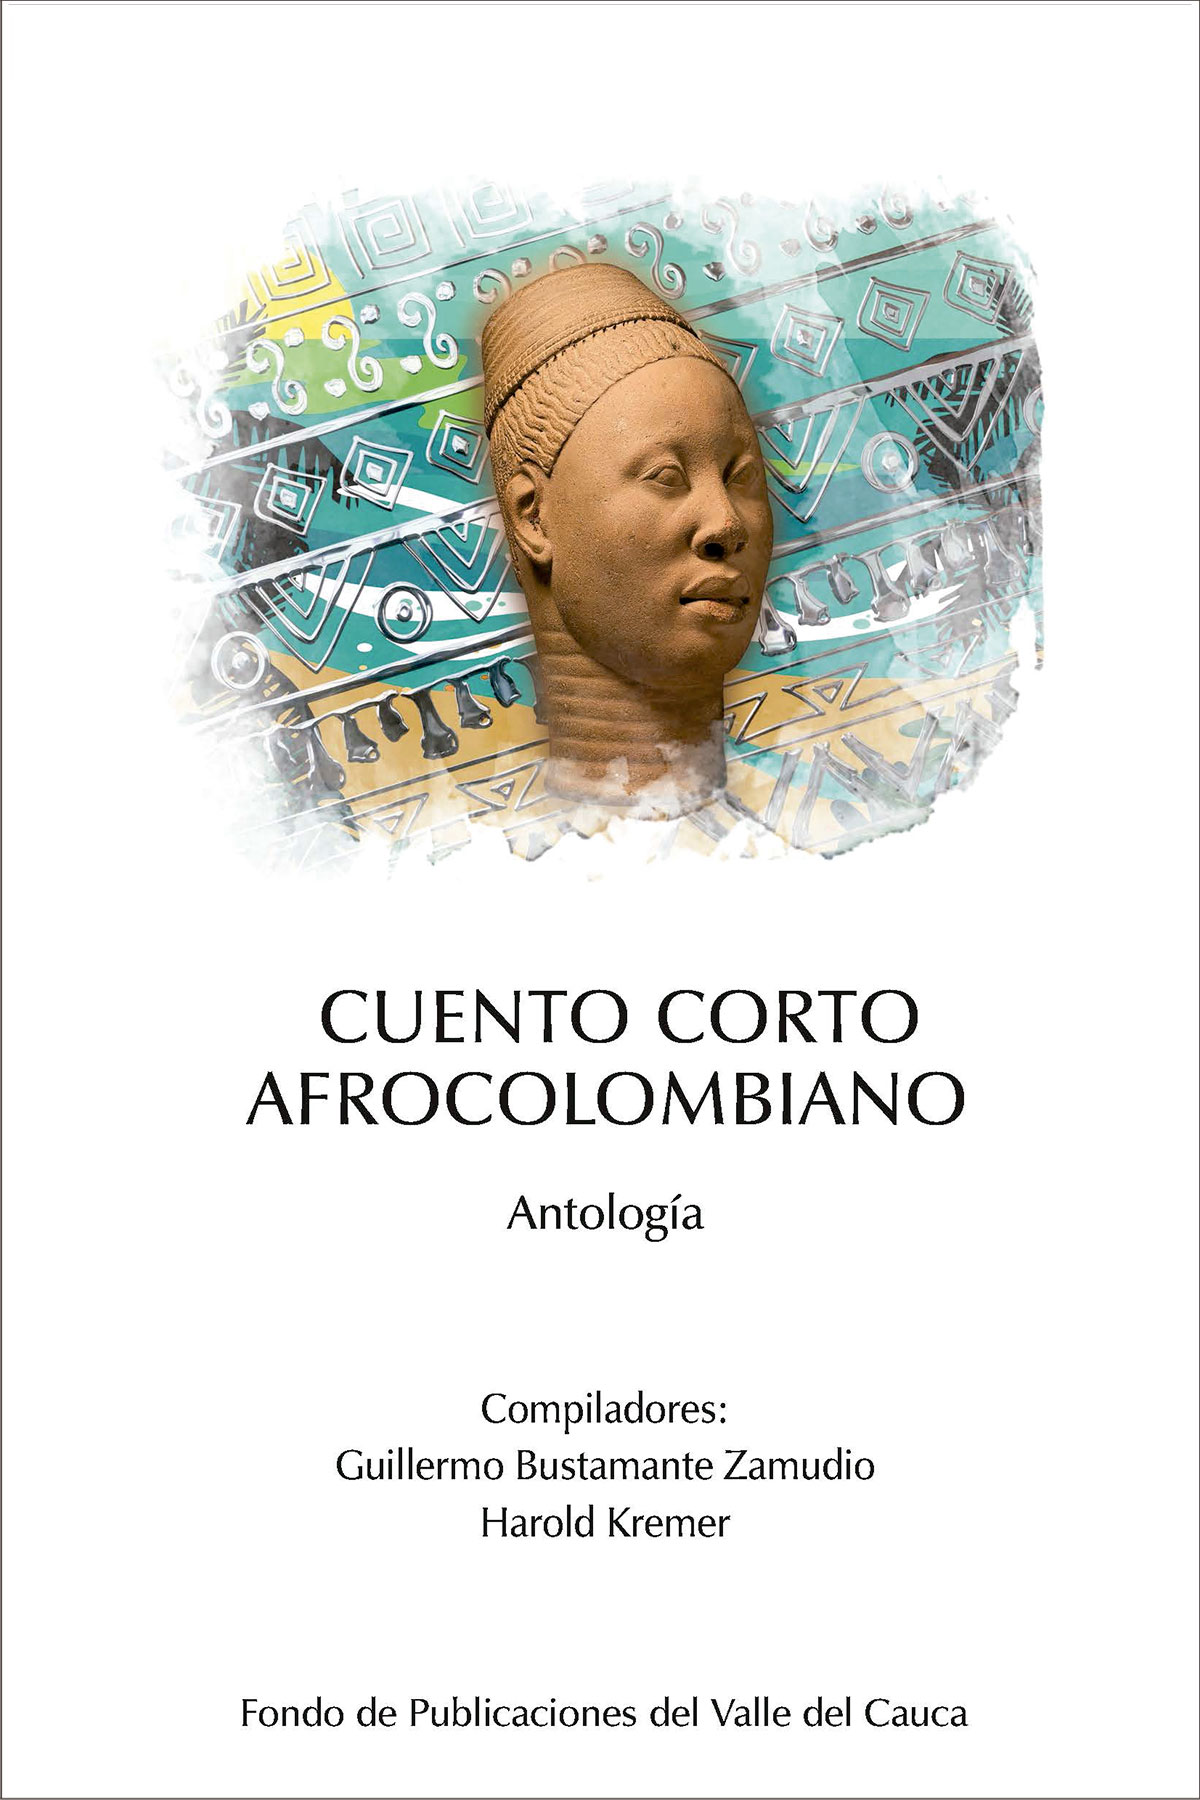 cuento corto afrocolombiano 20211130